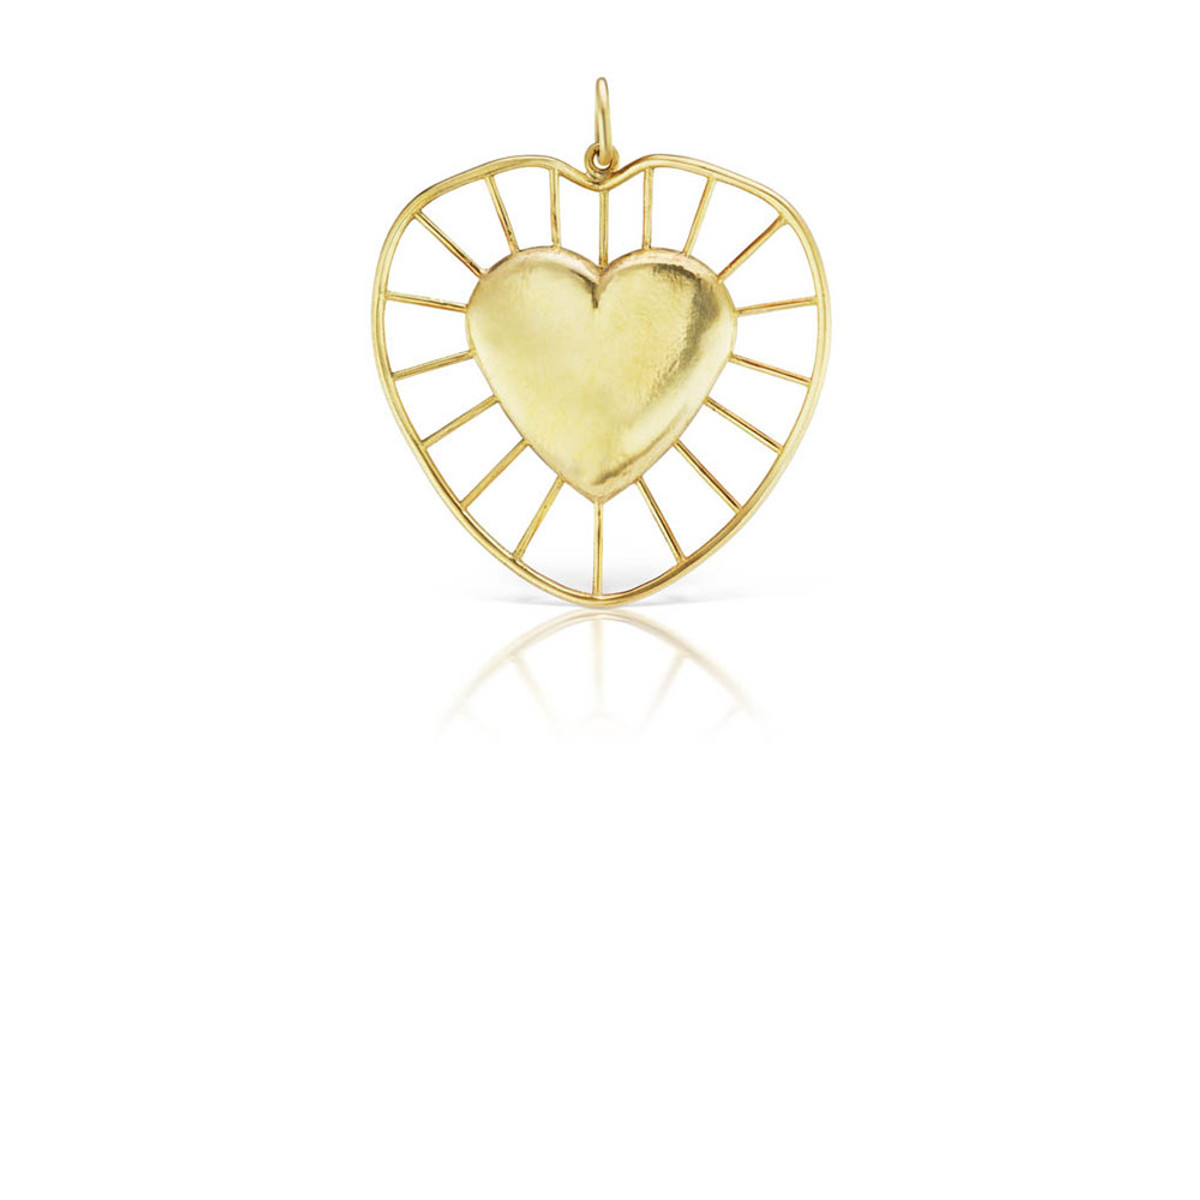 Christina Alexiou 18K Yellow Gold Large Radial Heart Charm Product Image